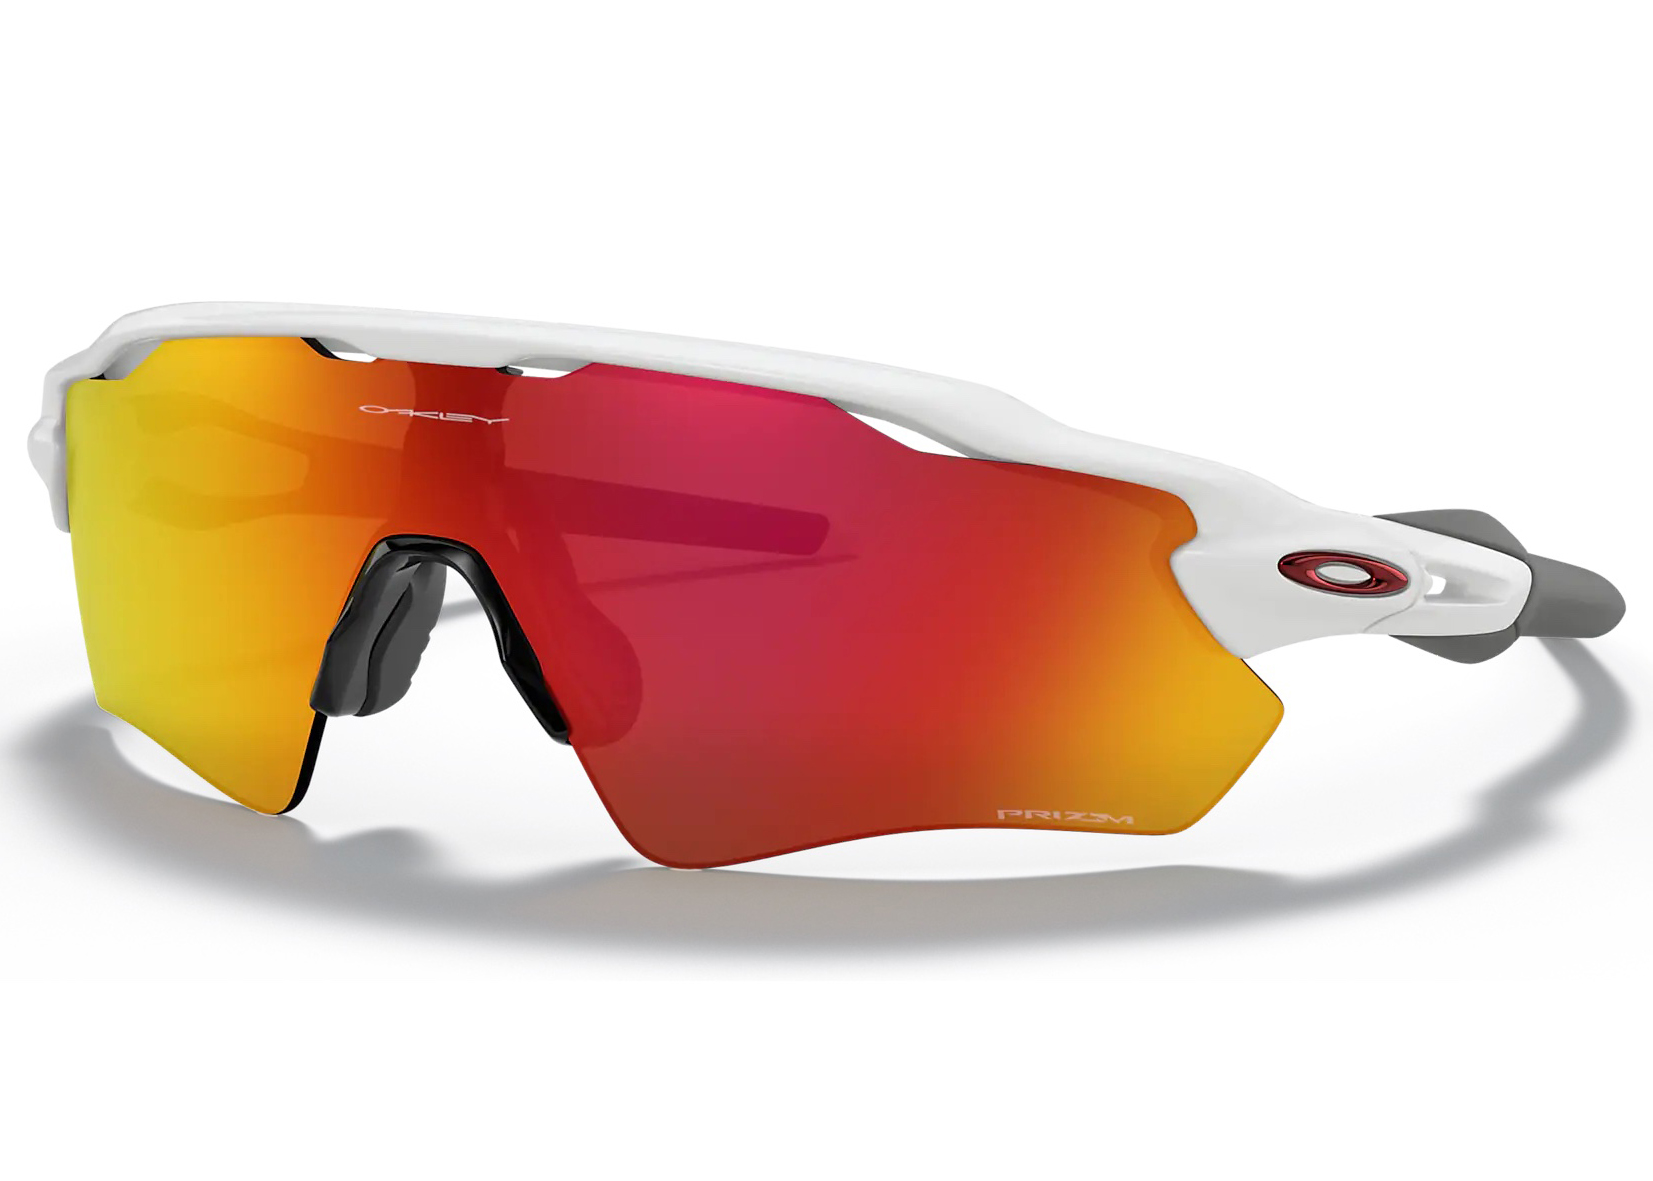 Oakley Radar EV Path Sunglasses Polished White/Prizm Ruby (OO9208-A238)